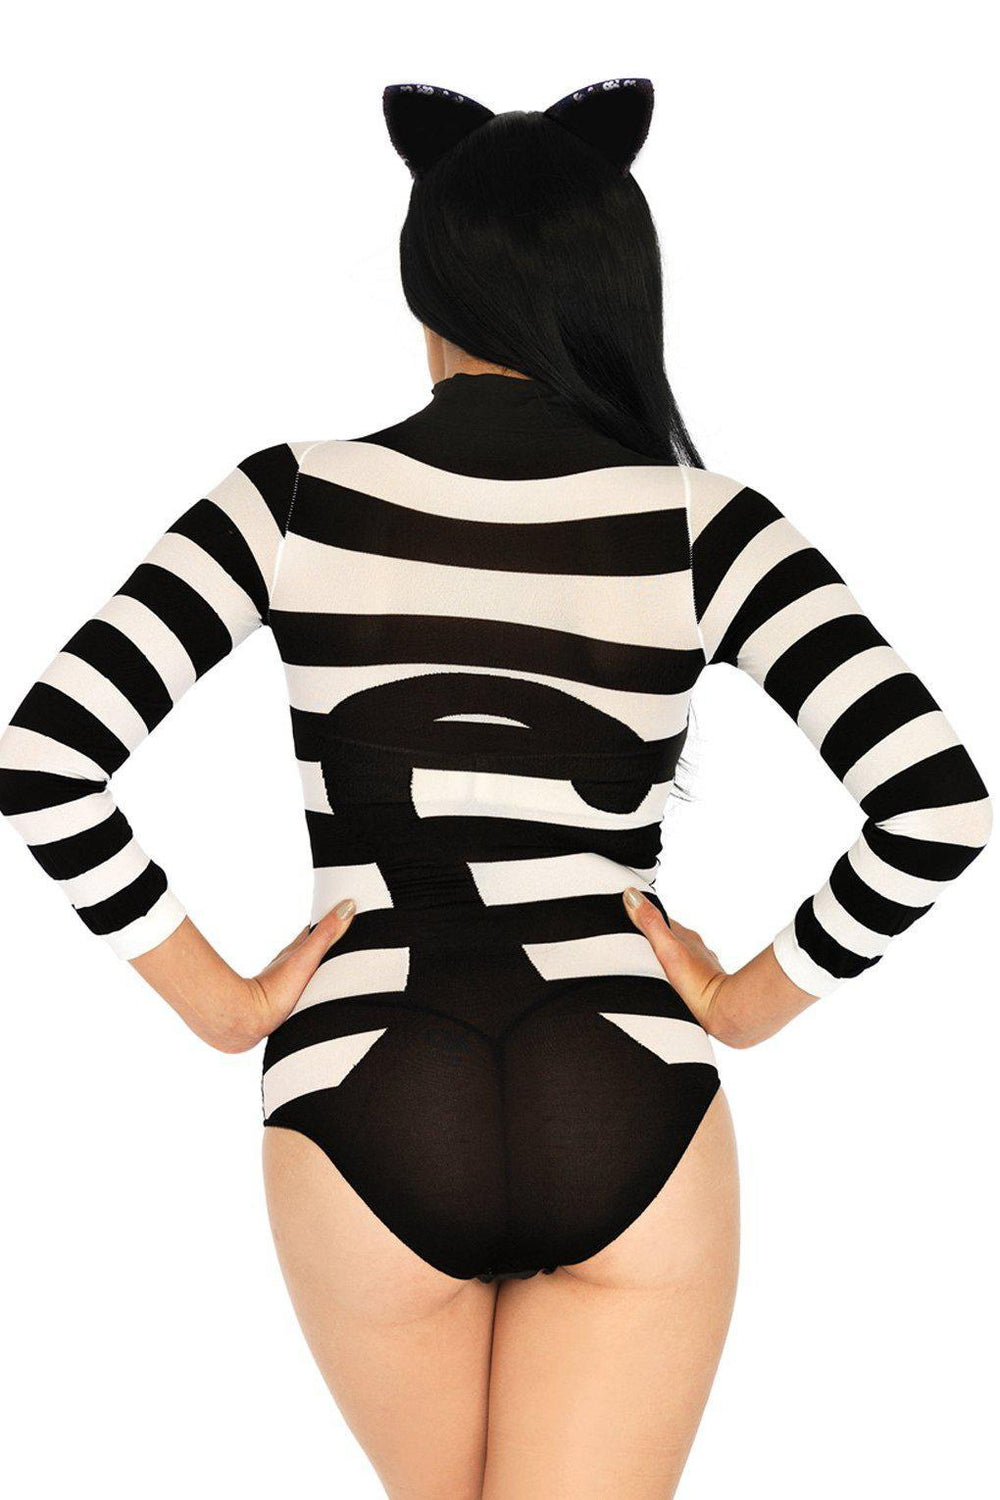 Spandex Striped Cat Costume-Cat Costumes-Leg Avenue-Black-O/S-SEXYSHOES.COM